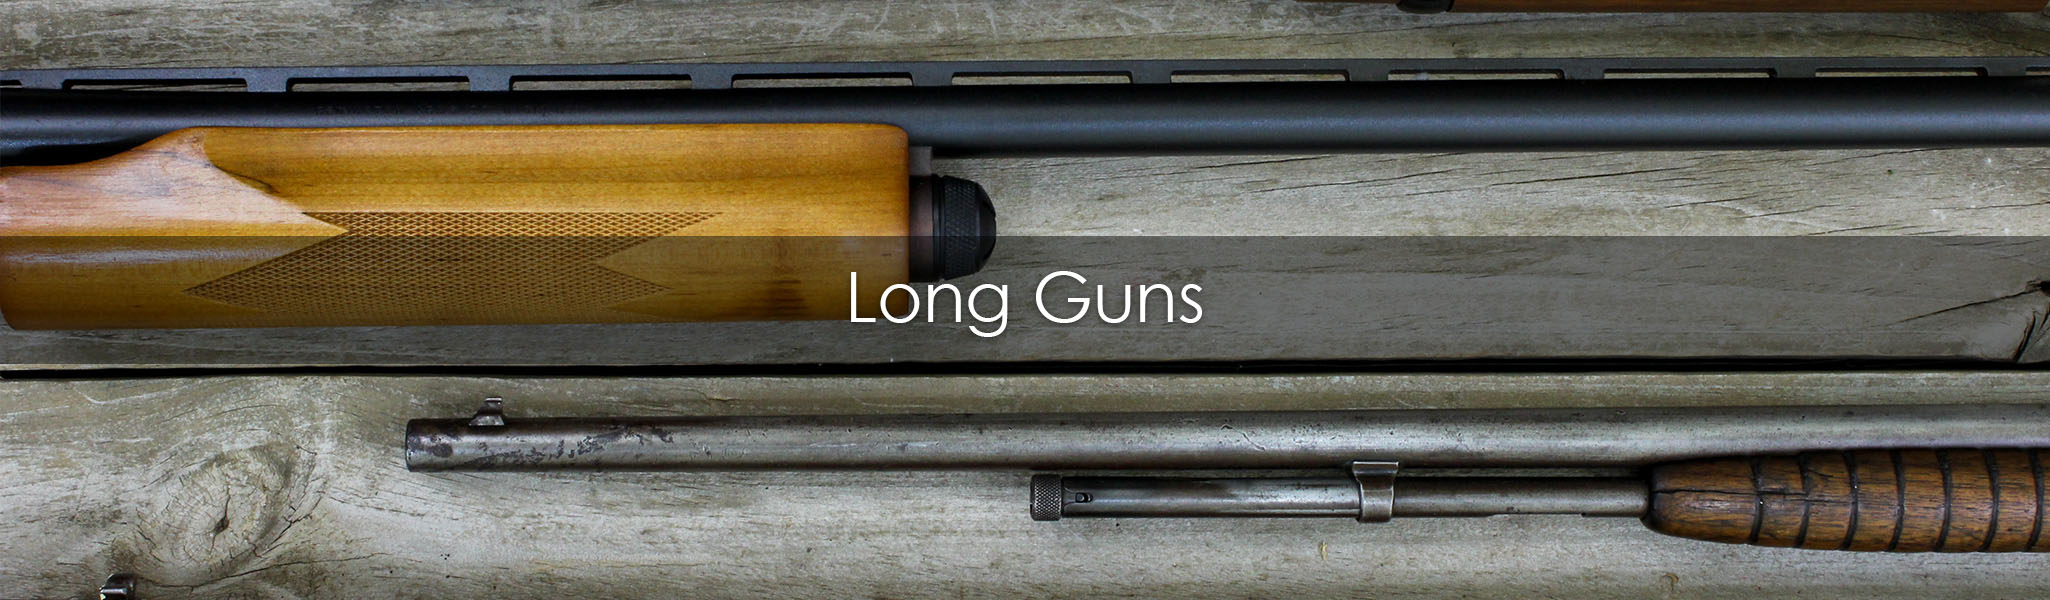 Long Guns - 2050x600 interior sliders